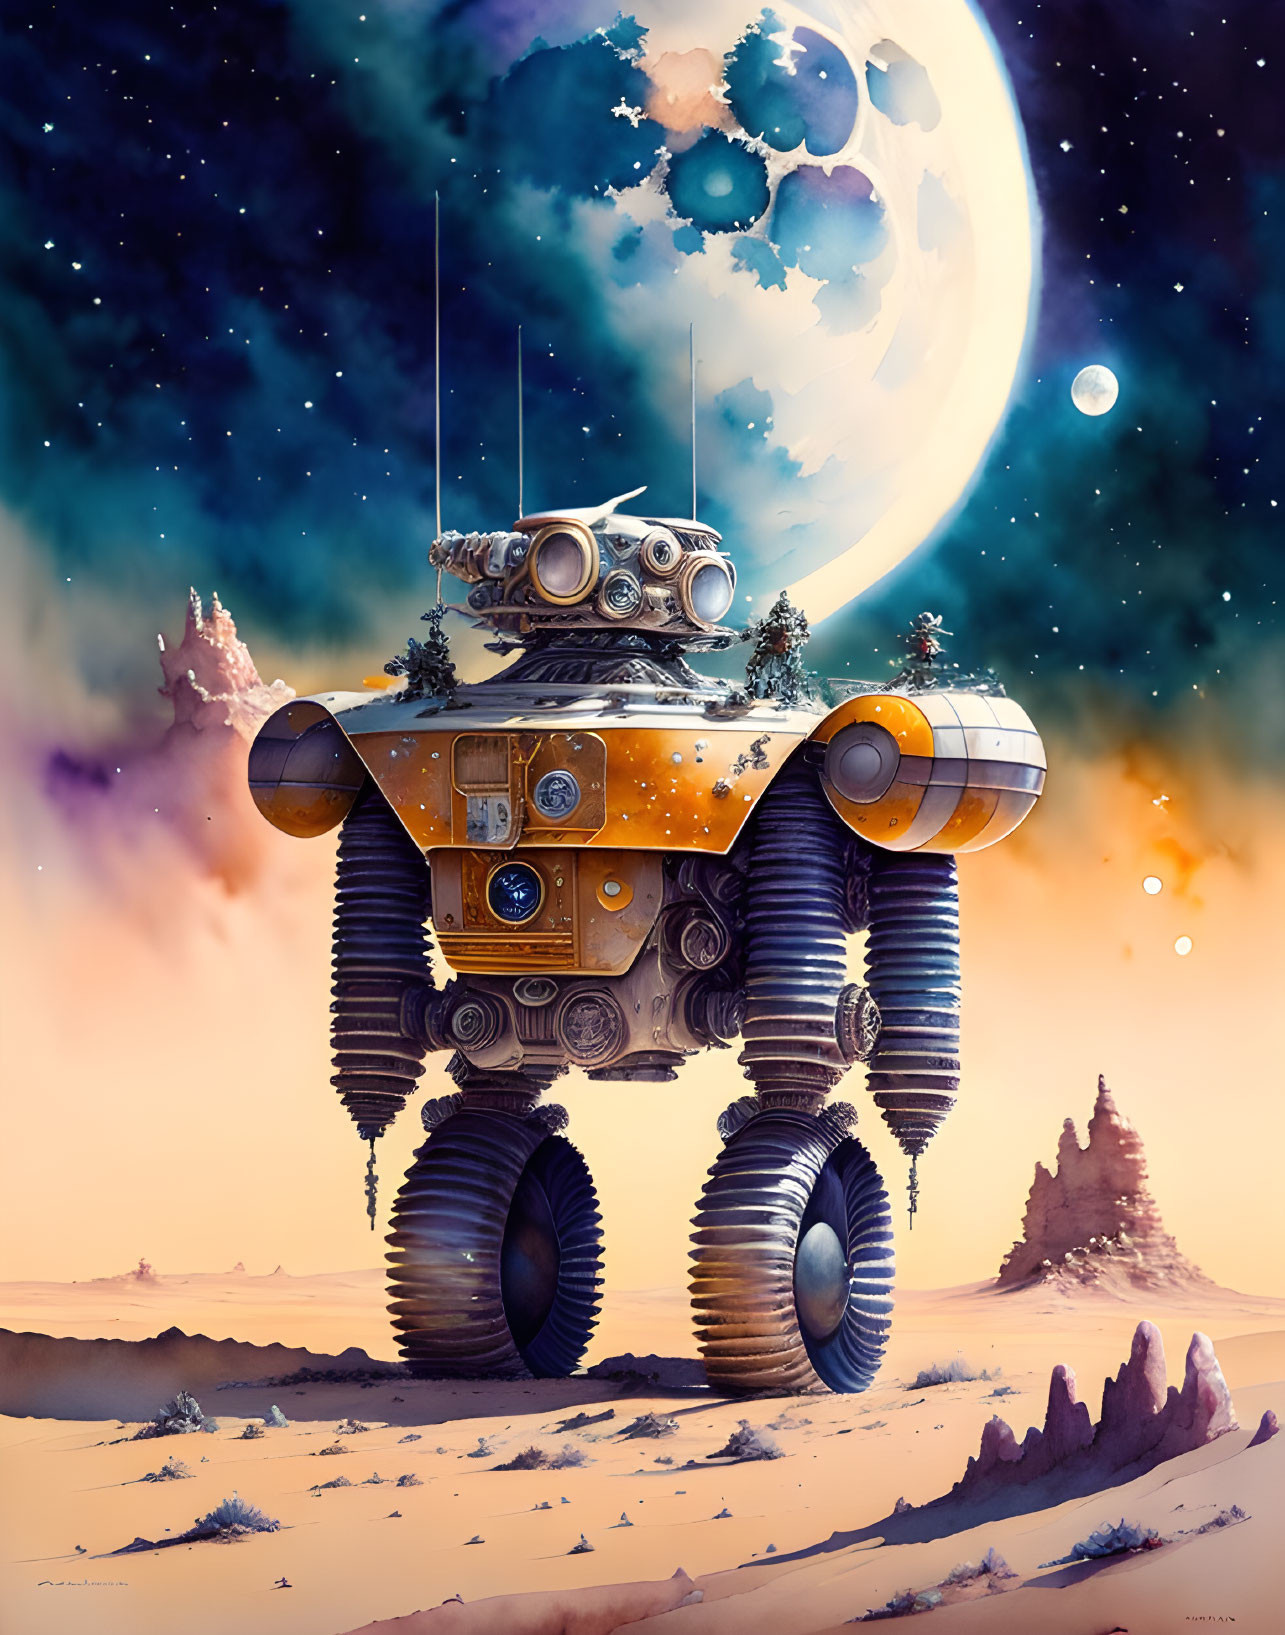 Robot on the moon